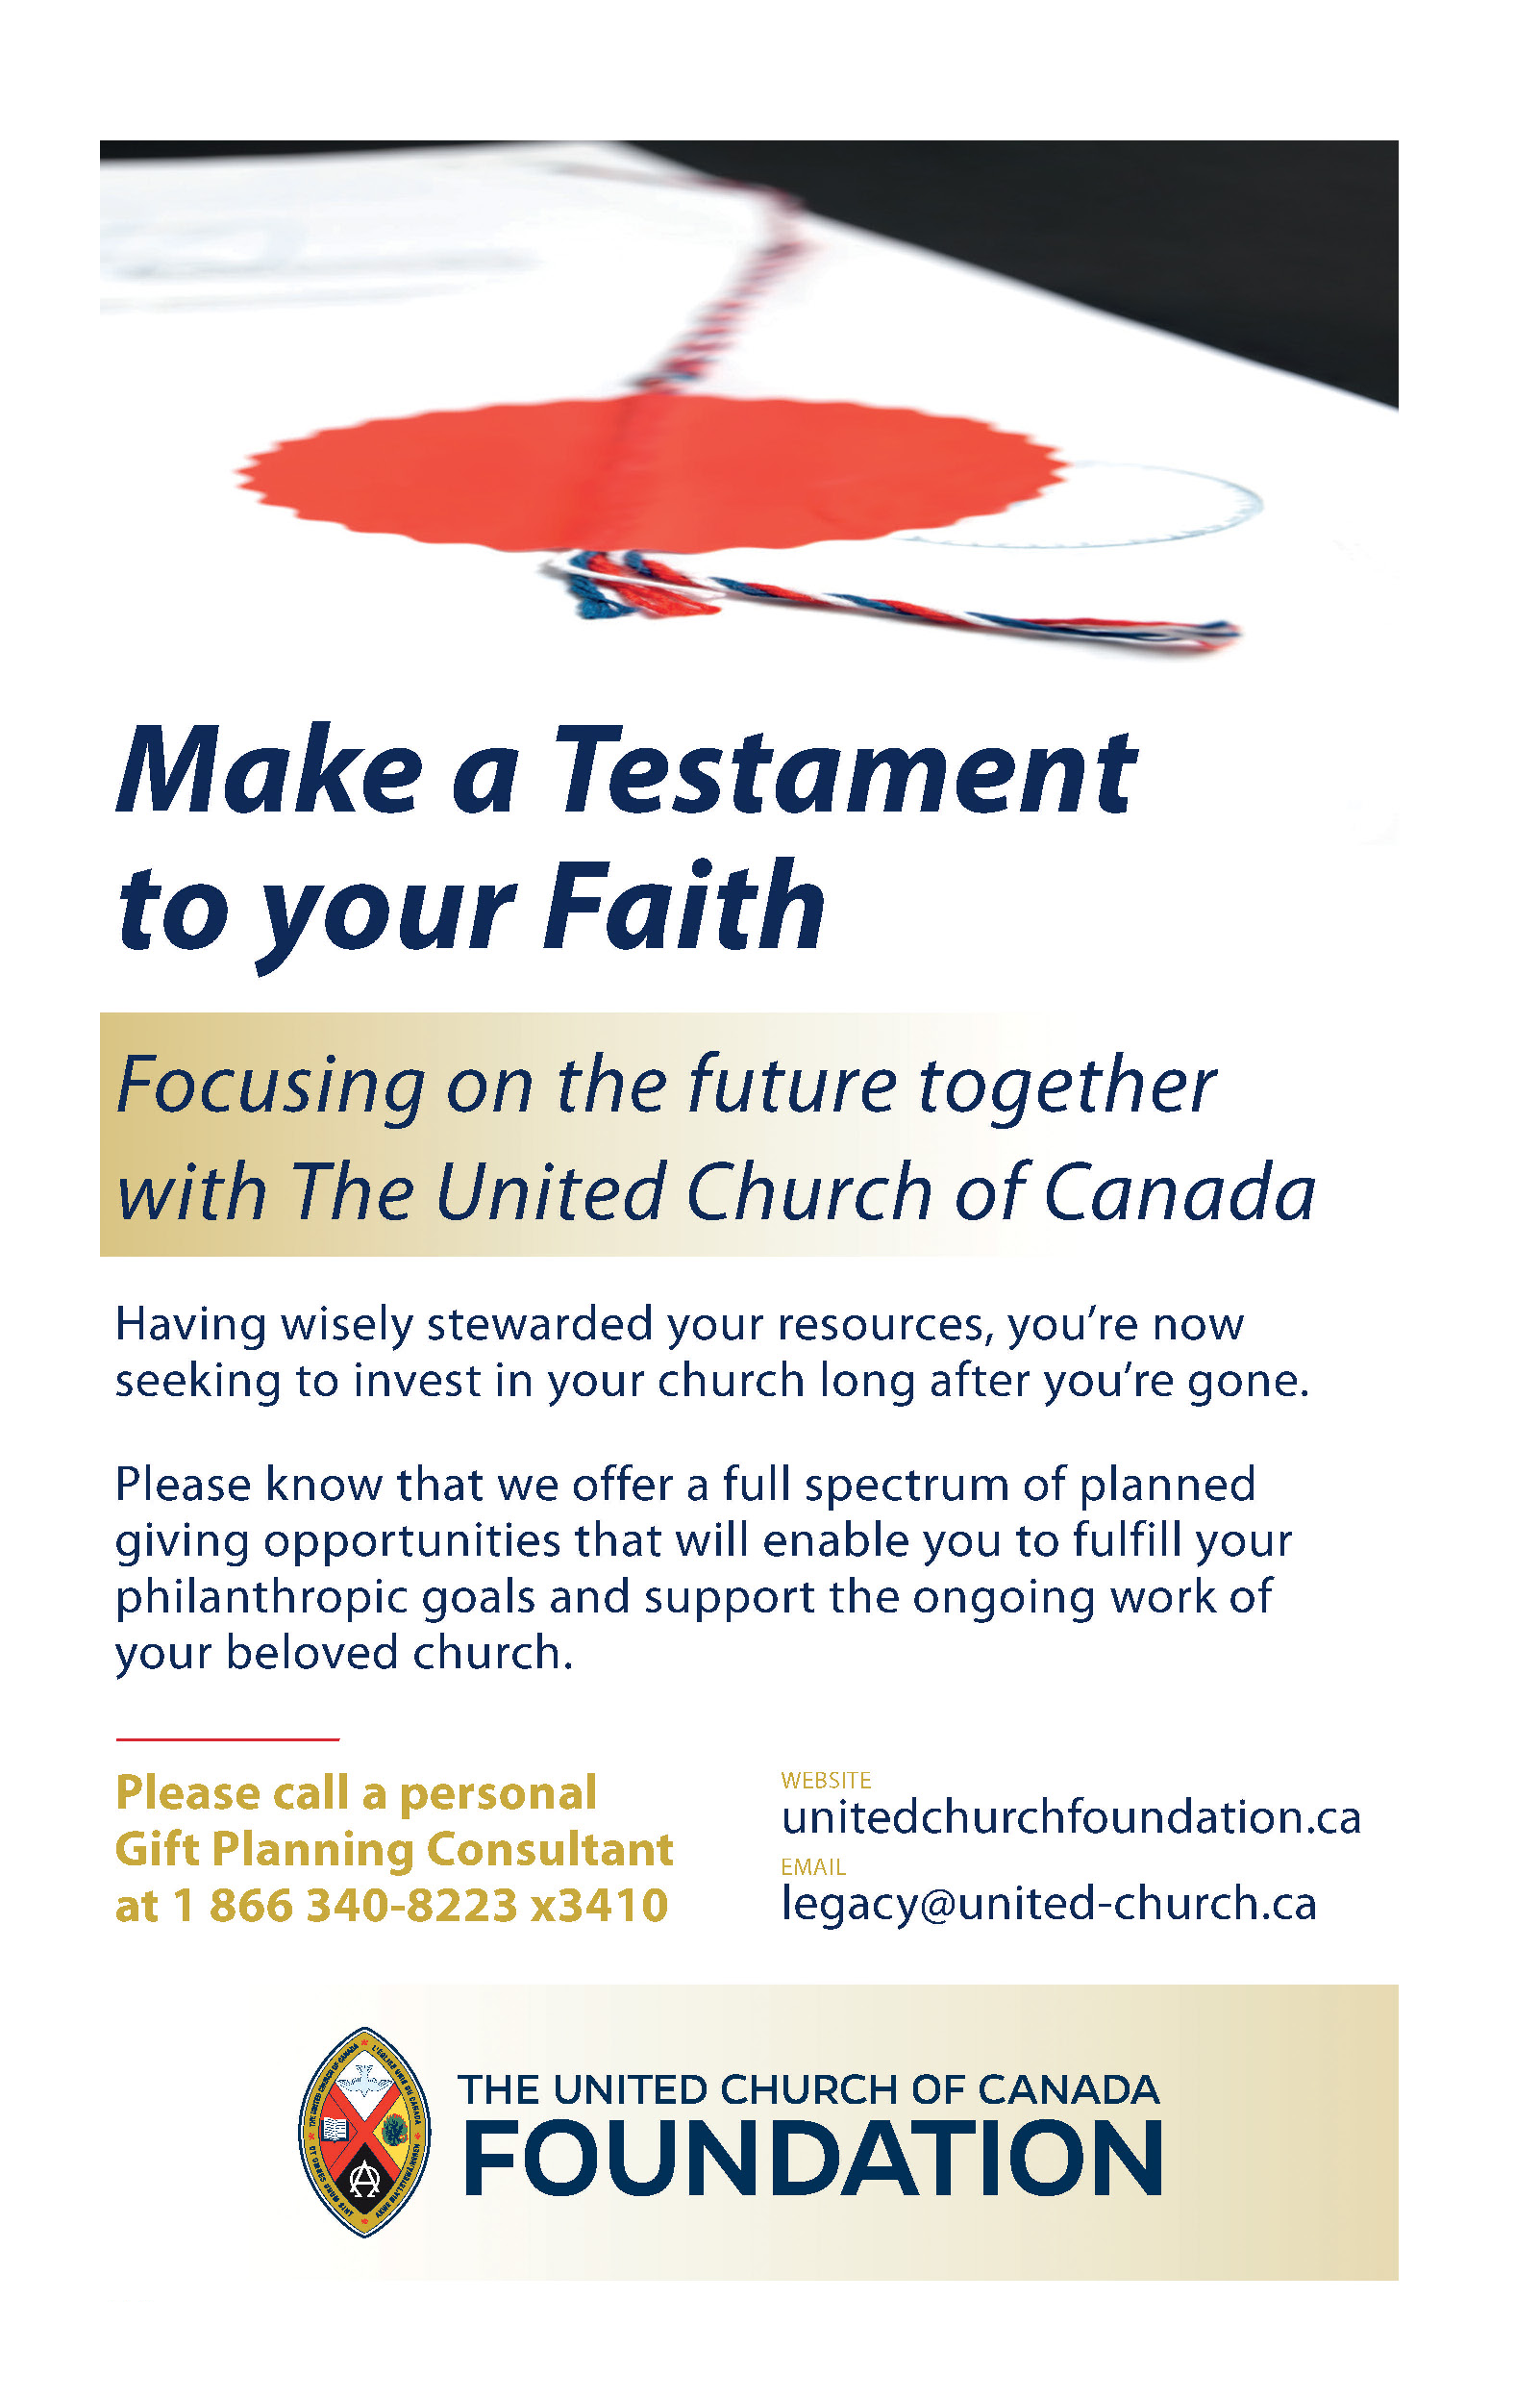 UNITED CHURCH OF CANADA FOUNDATION (THE)